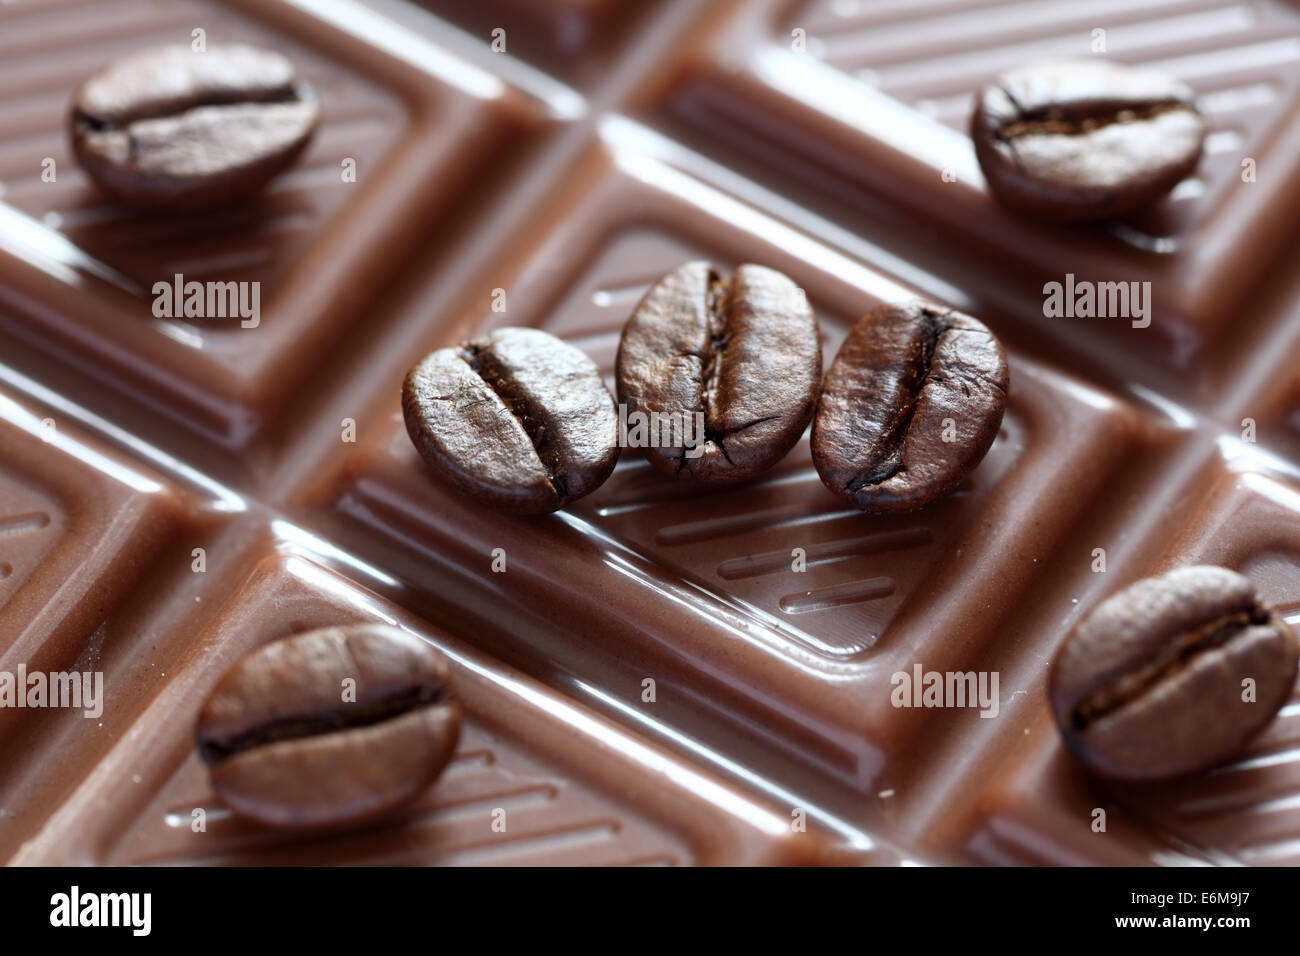 Milk chocolate and coffee beans closeup. Stock Photo